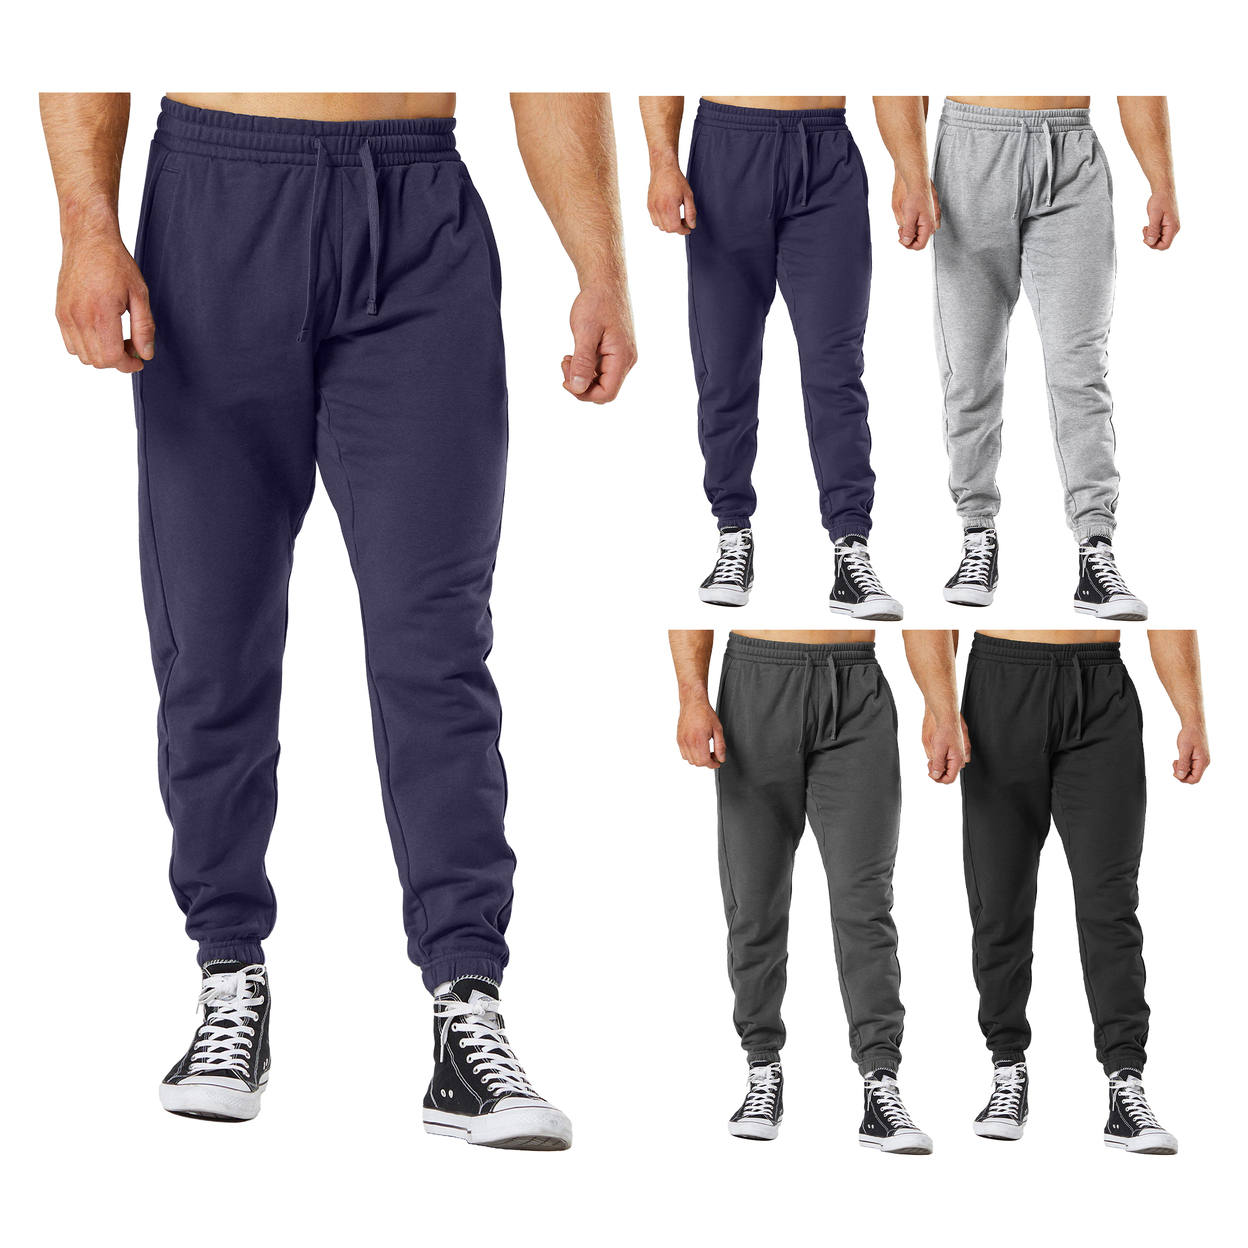 2-Pack: Men's Ultra-Soft Cozy Winter Warm Casual Fleece-Lined Sweatpants Jogger - Black & Grey, Small